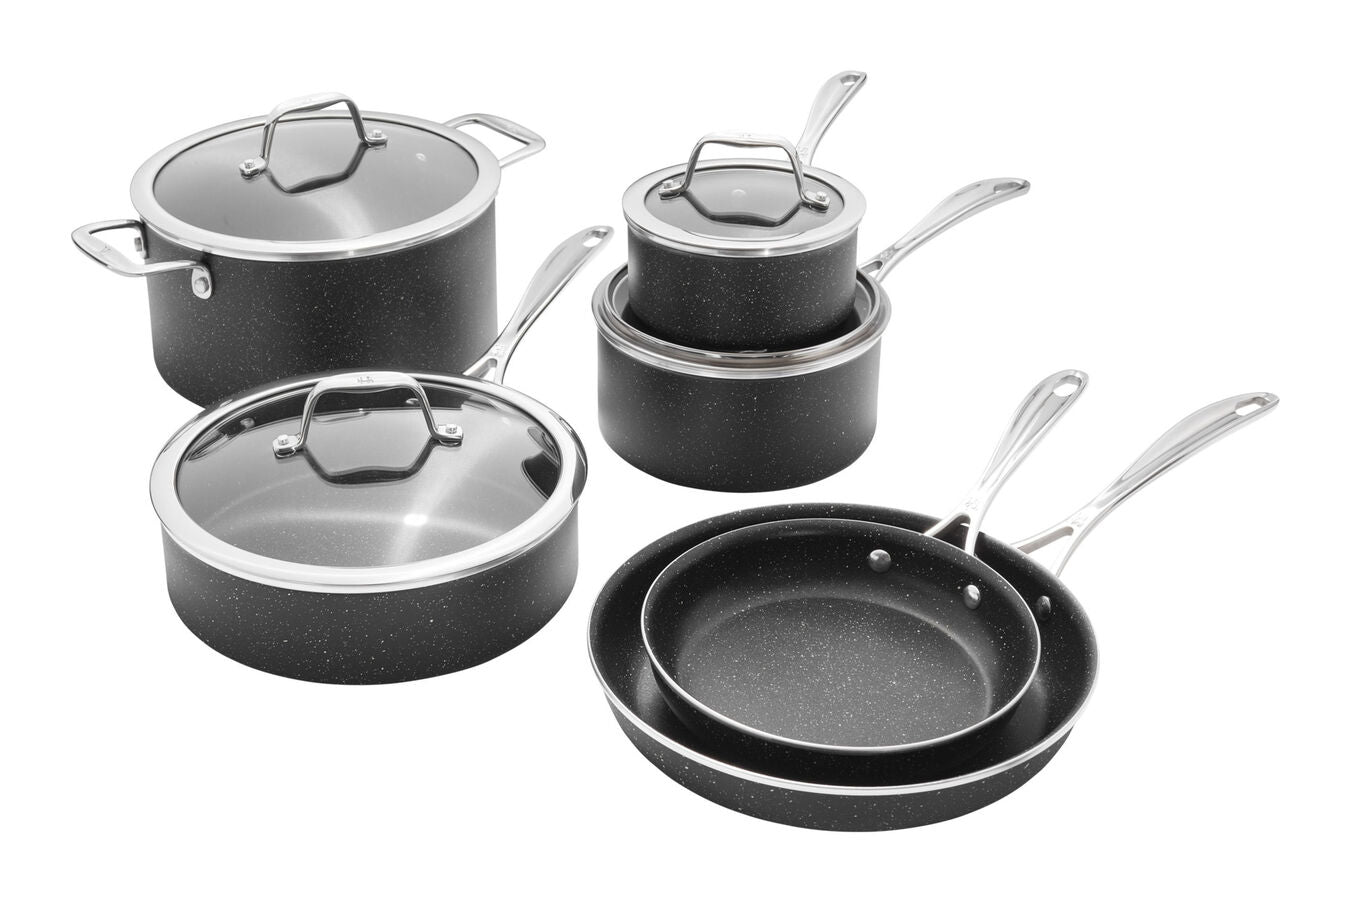 Master Cuisine Gray Aluminum 10-Piece Cookware Set